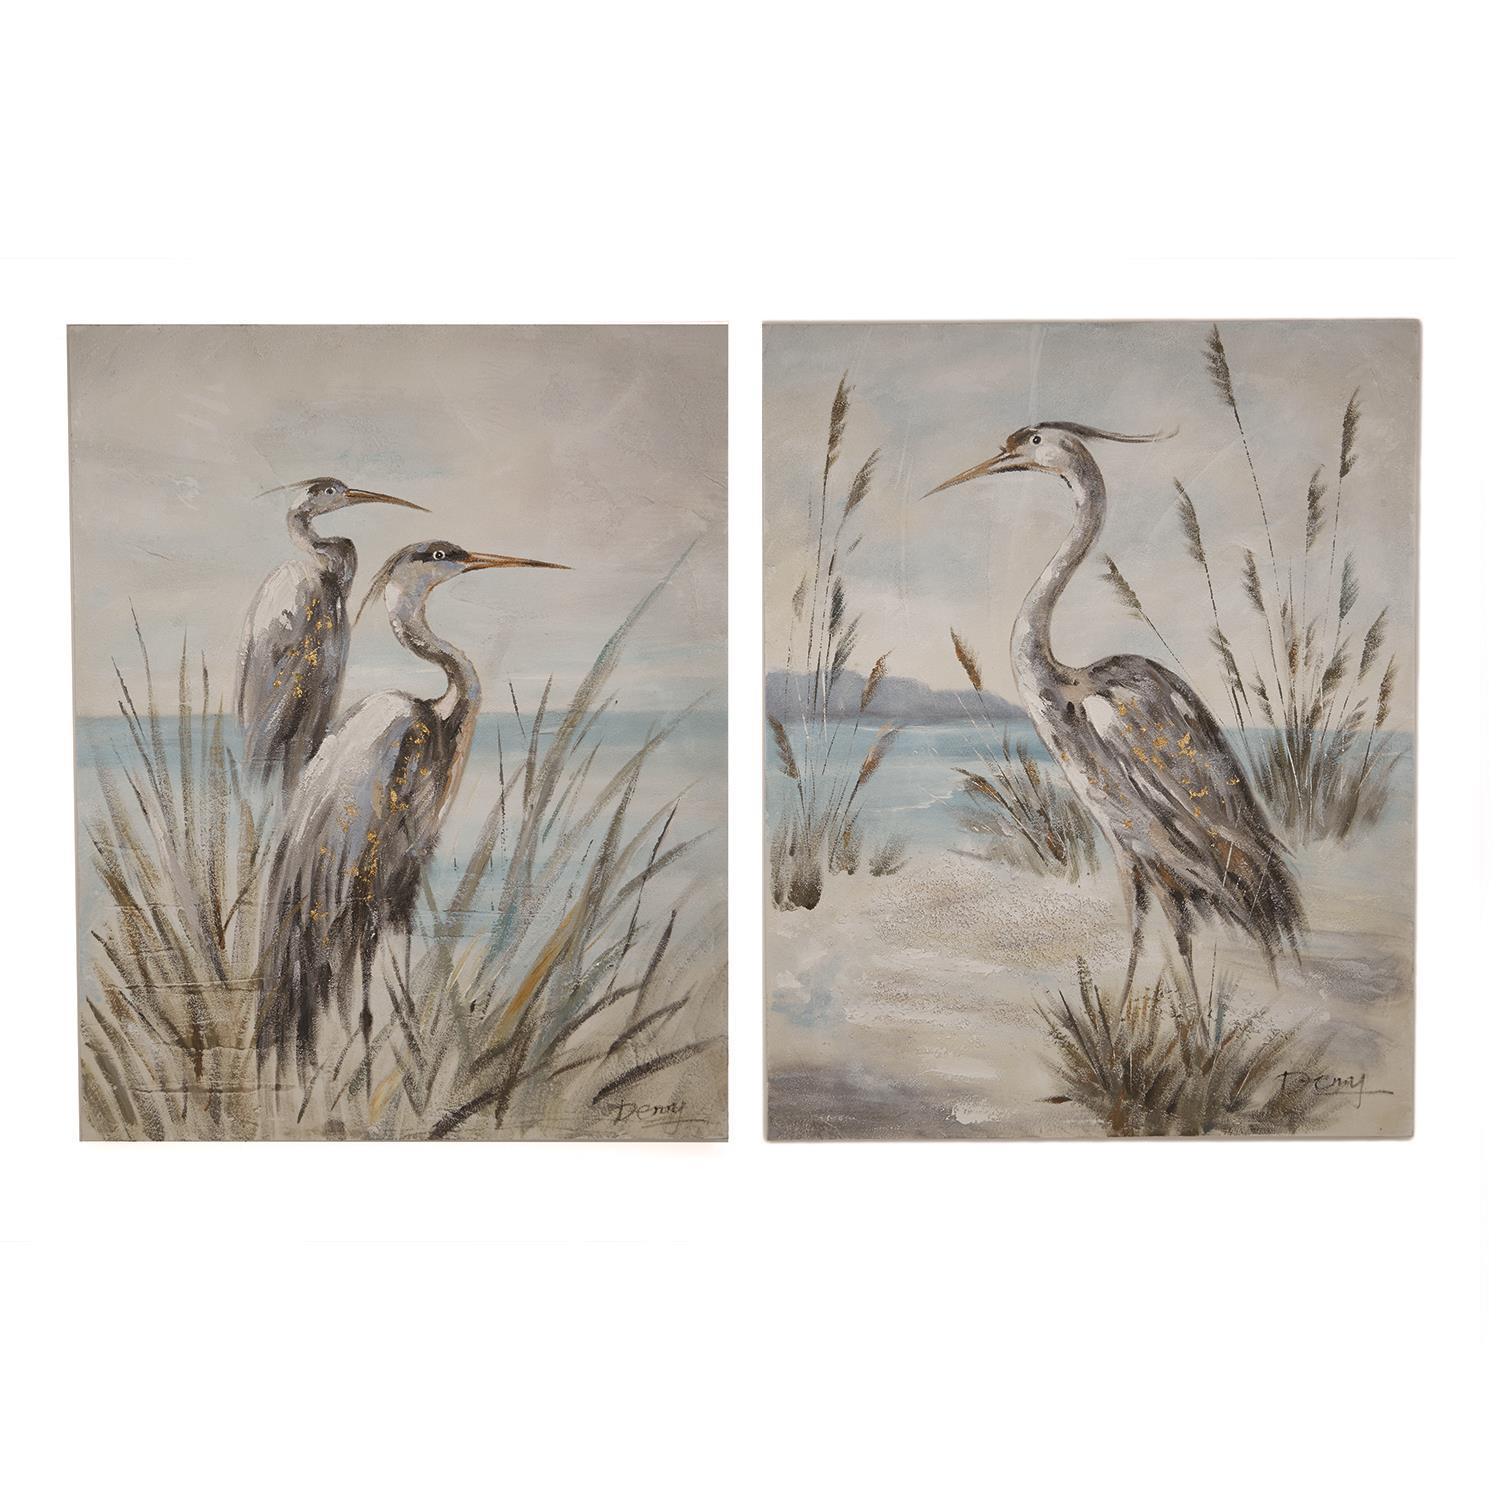 Shore Bird Wall Art Canvas Set of 2